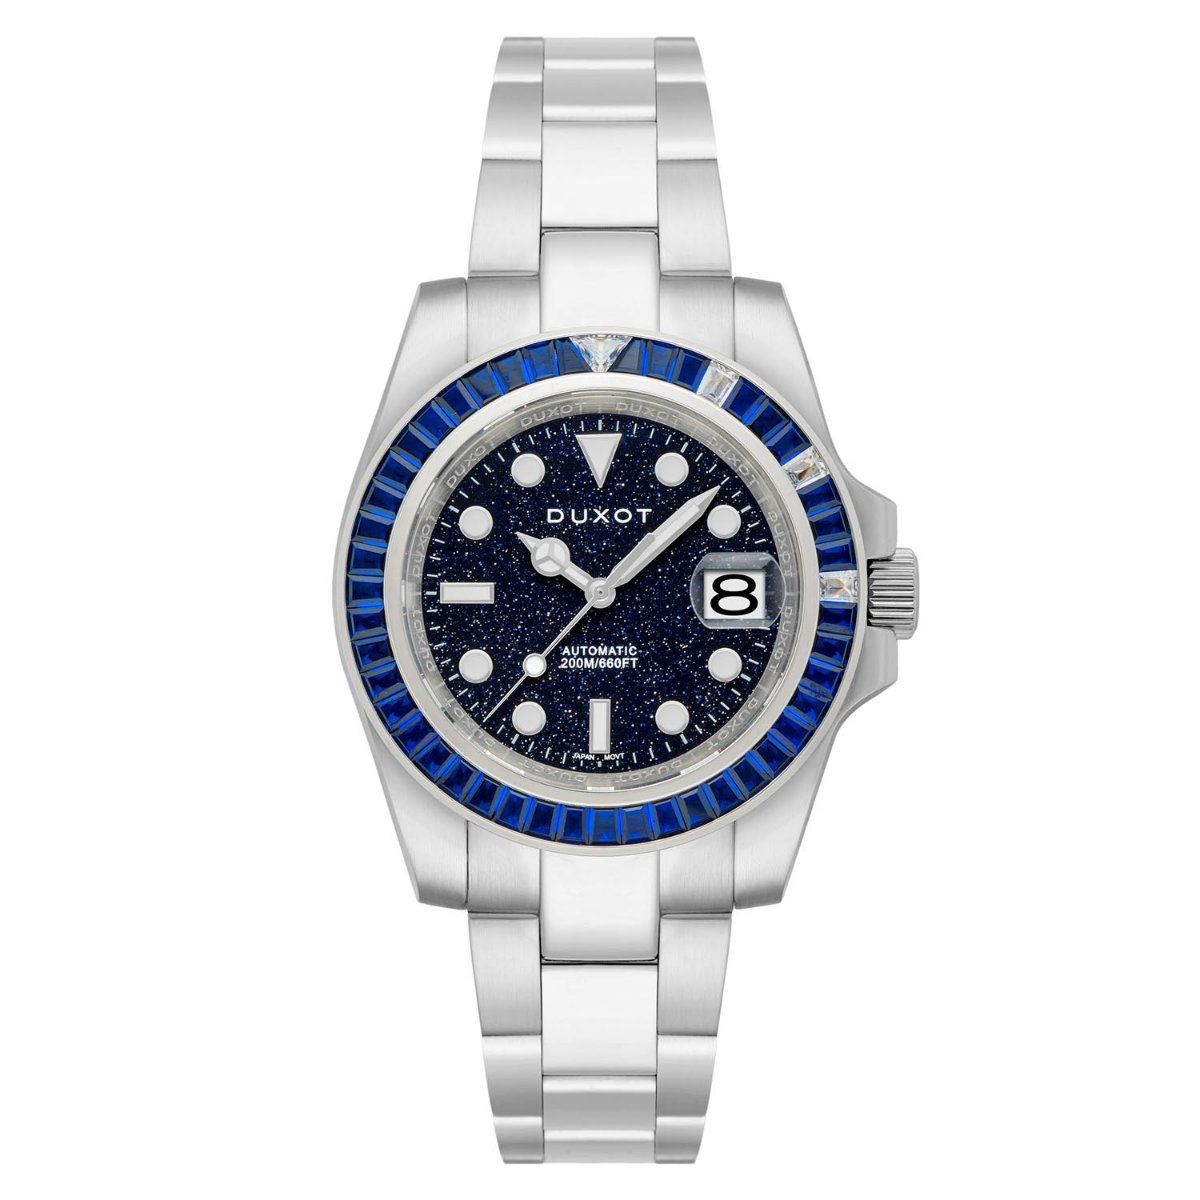 Seiko FF watch | Fashion watches, Futuristic watches, Watches for men